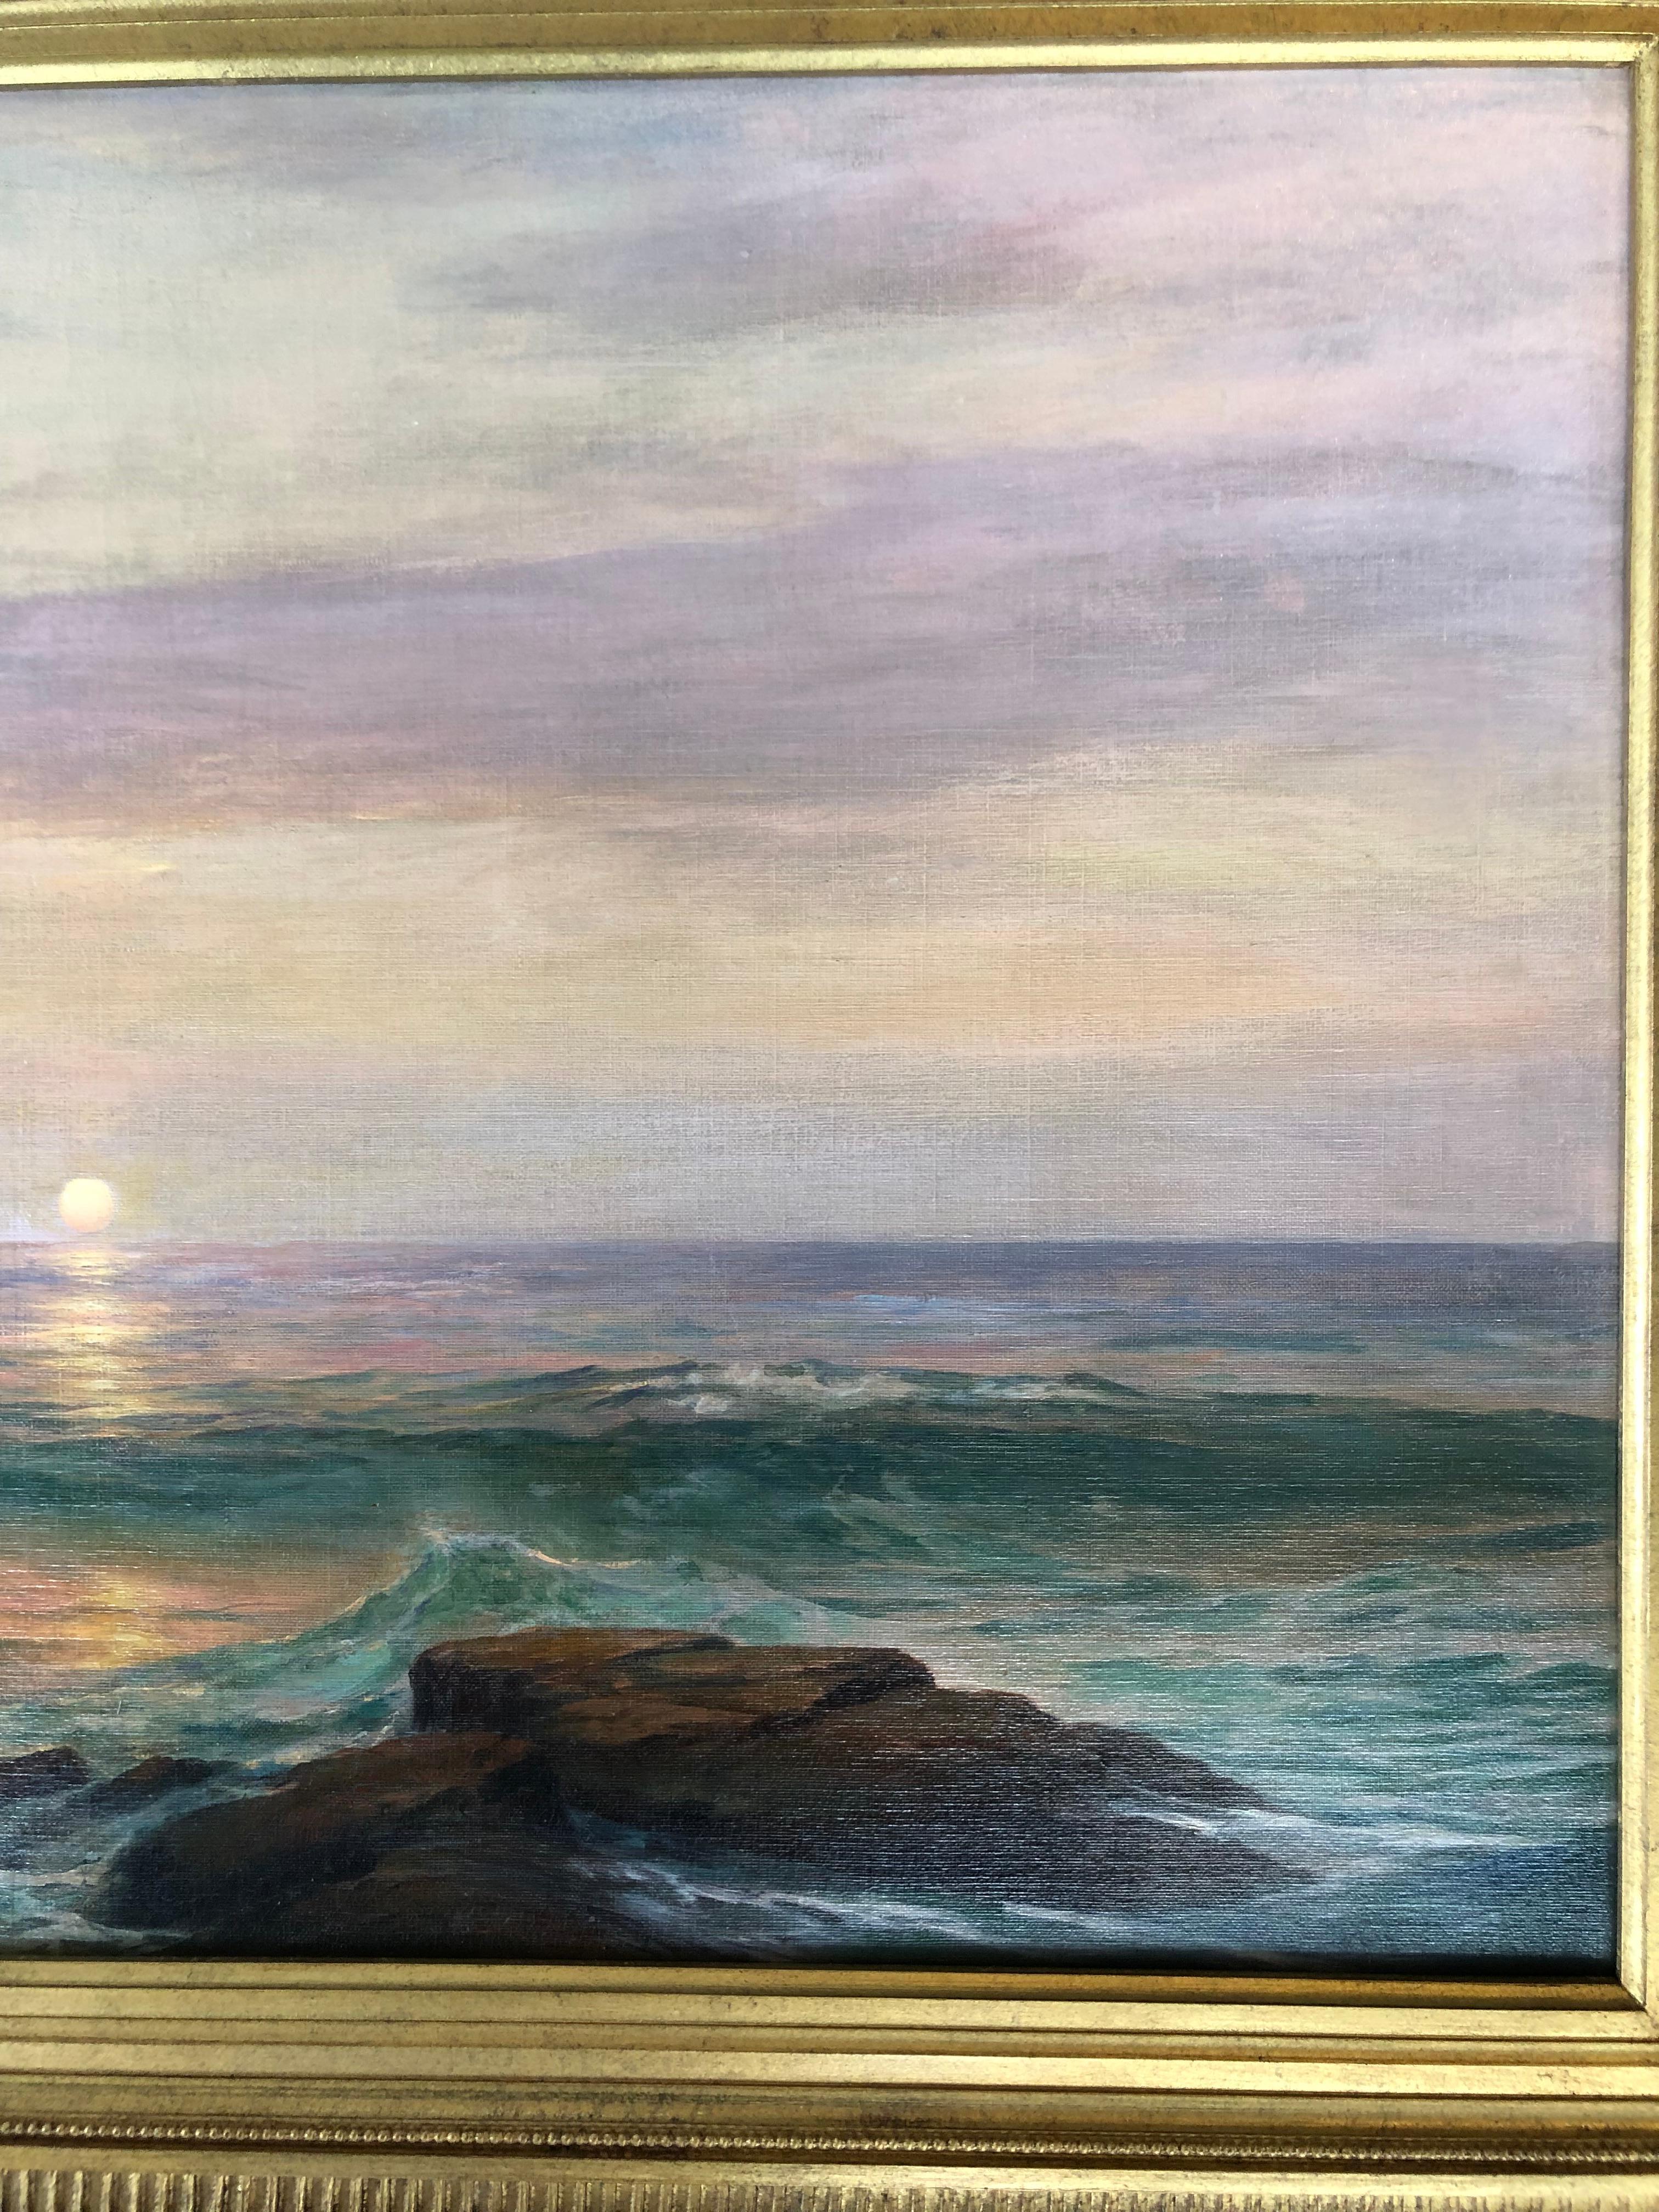 American Sunset on the Coast by Warren Sheppard